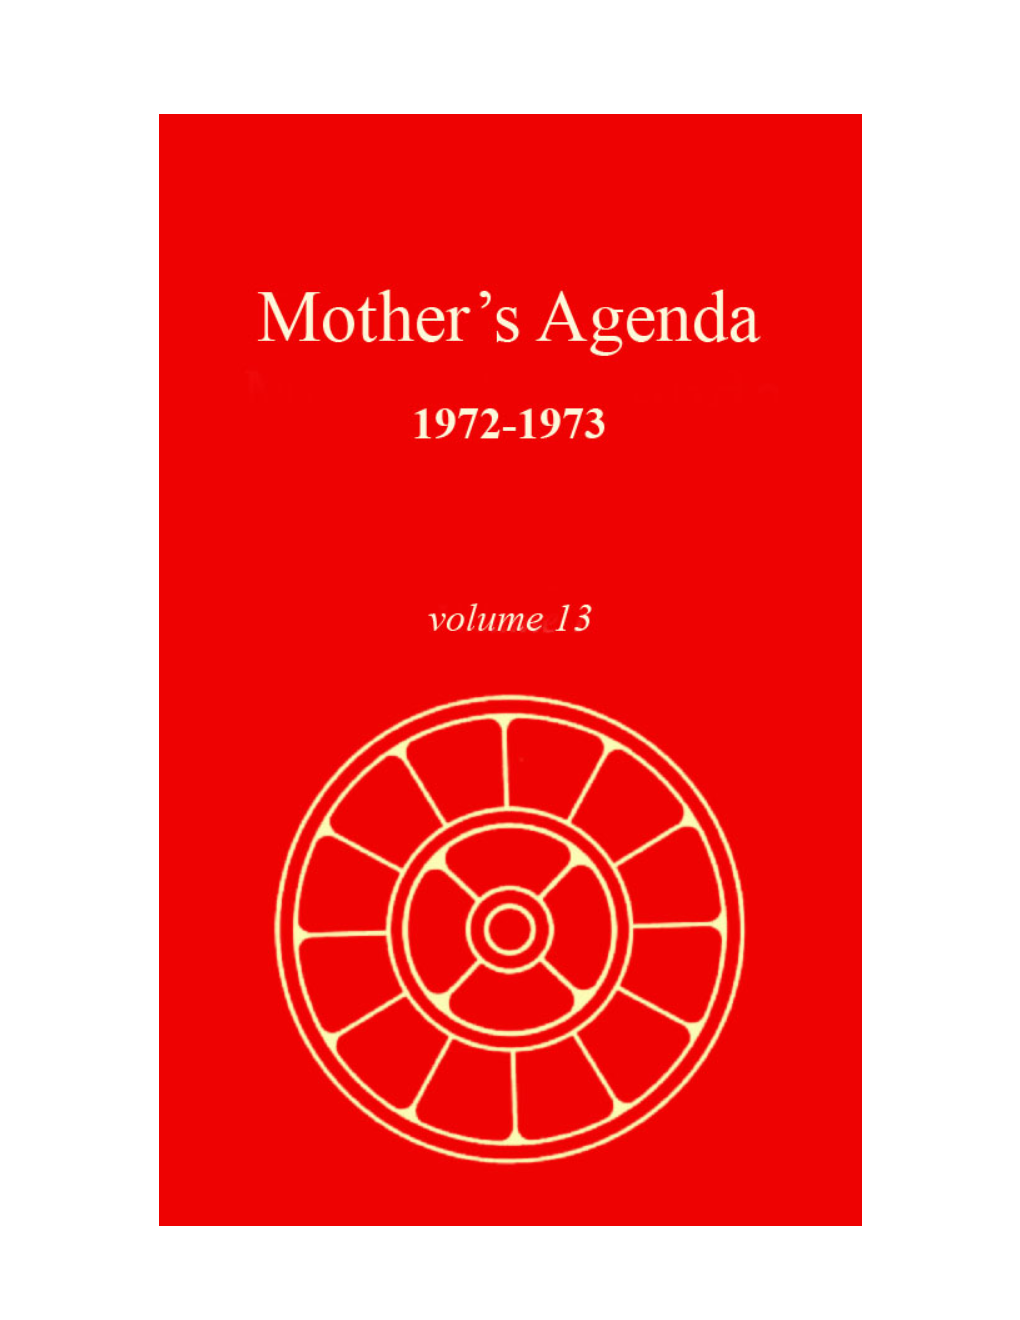 Mother's Agenda, Volume 13. 1972-1973